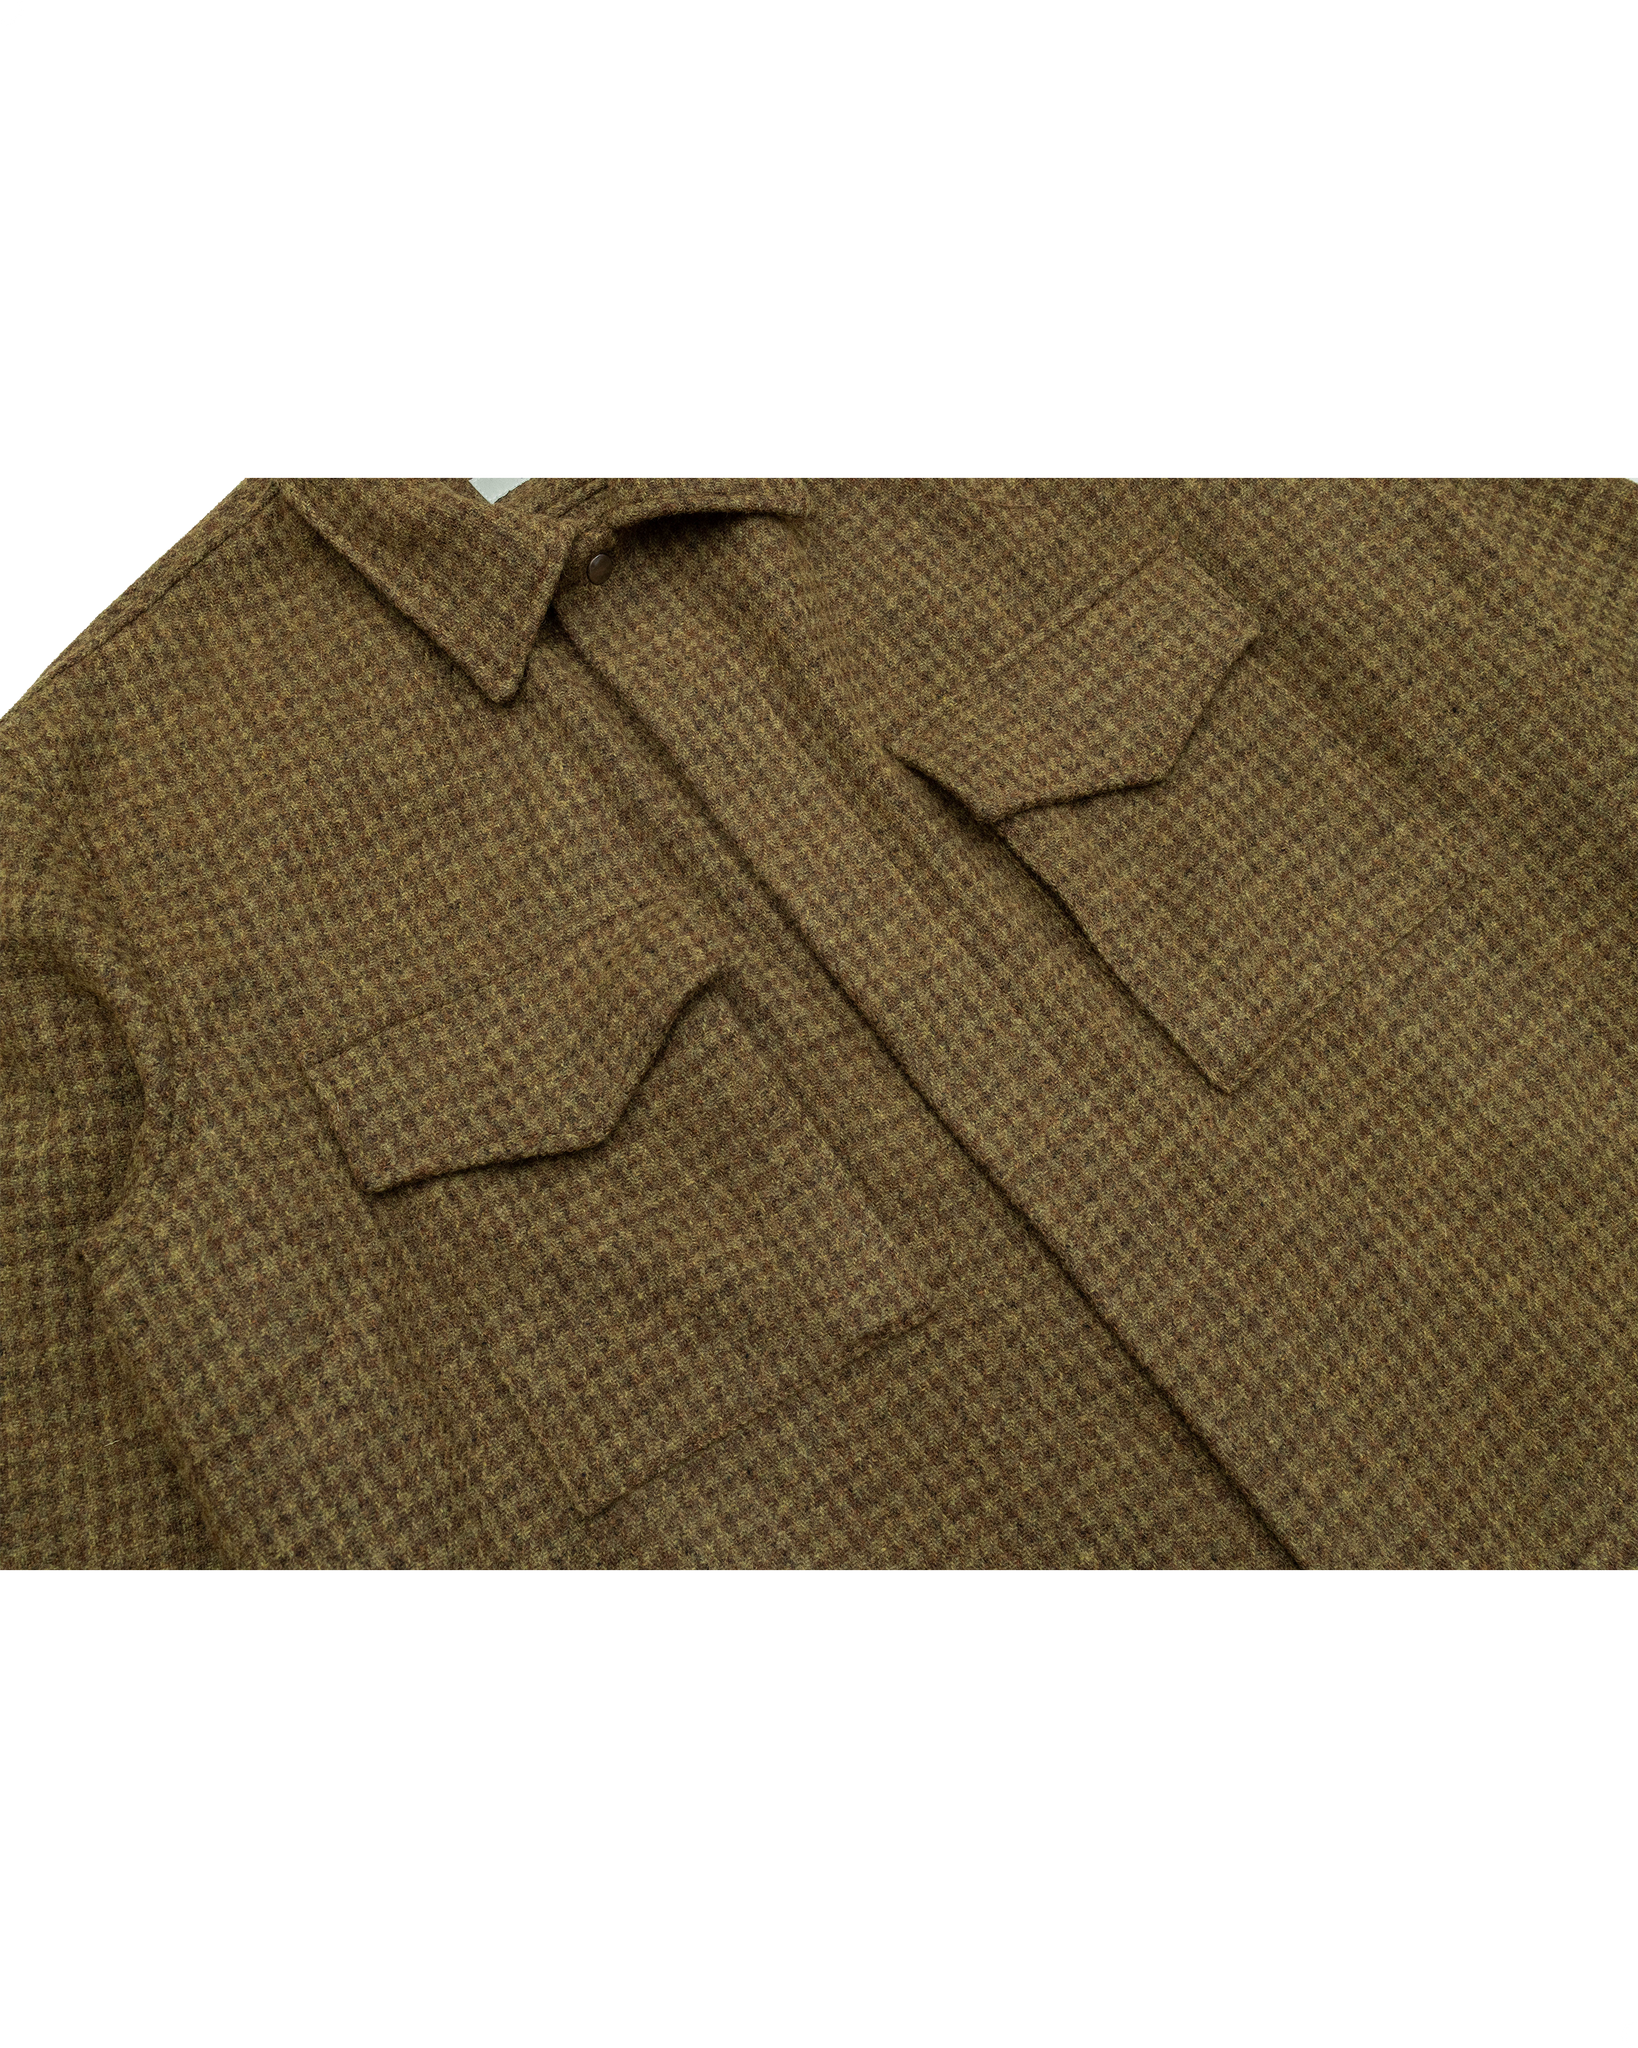 London '68 Jacket: Houndstooth Wool